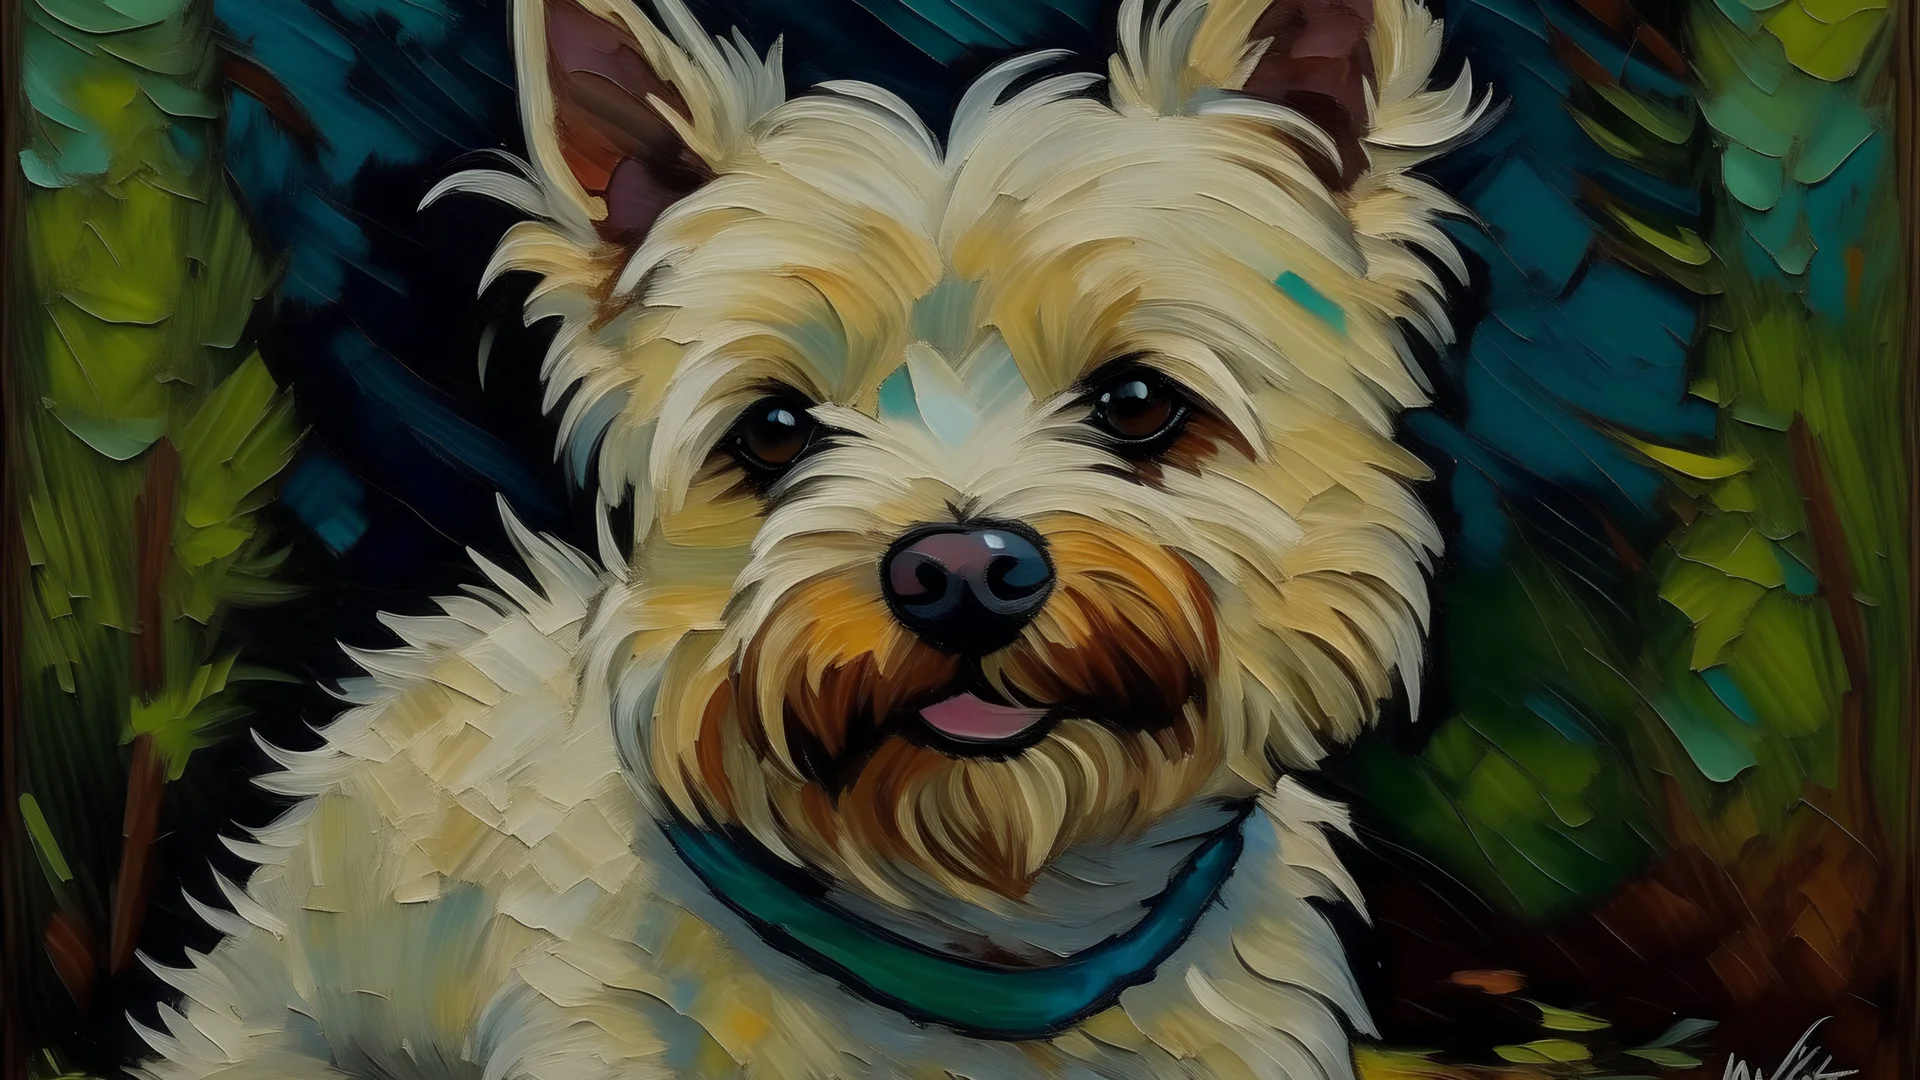 Portrait of west highland terrier dog in stile of Van Gogh